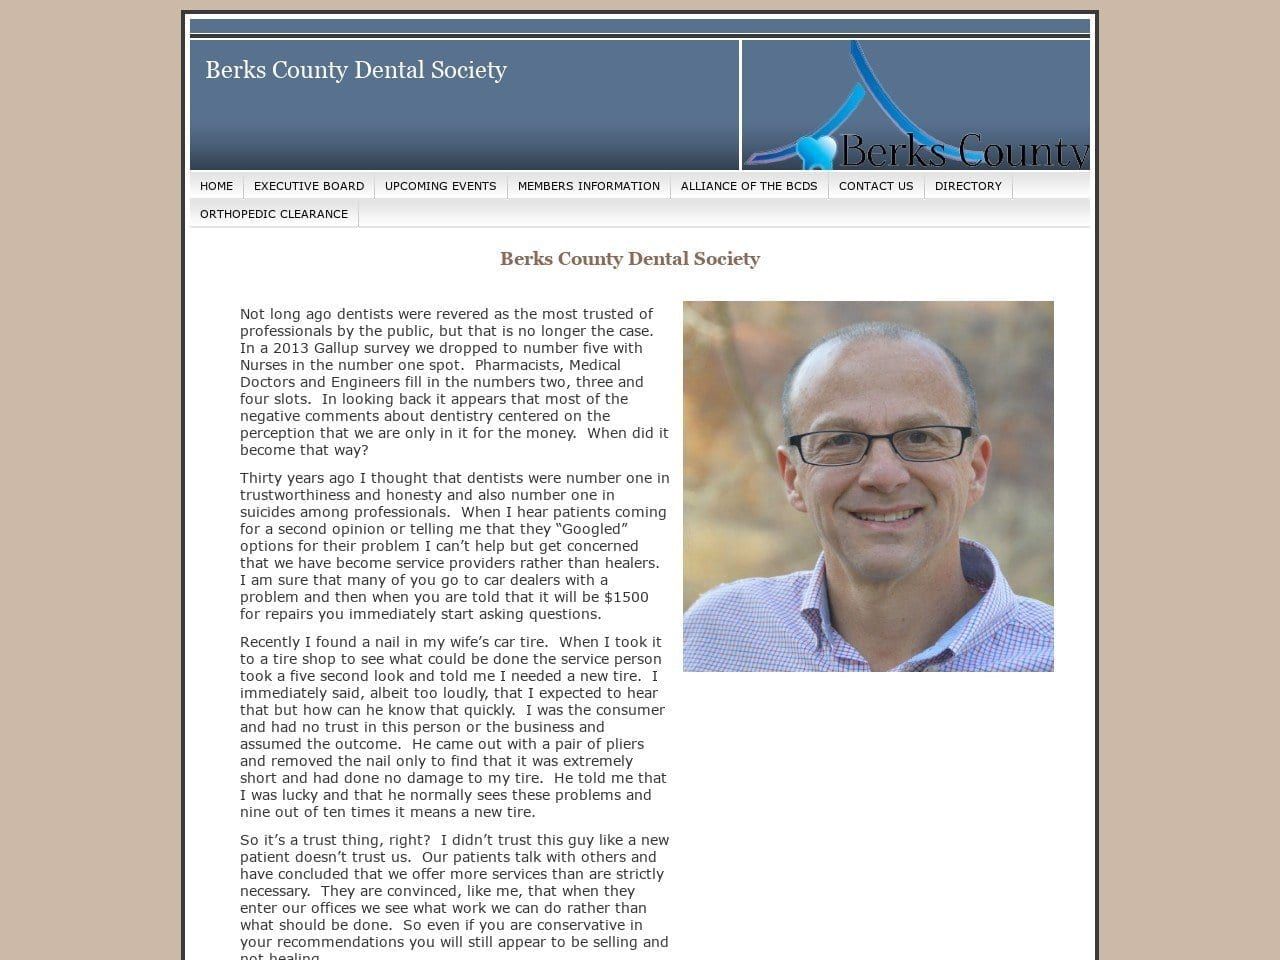 Berks County Dental Society Website Screenshot from berkscountydental.org